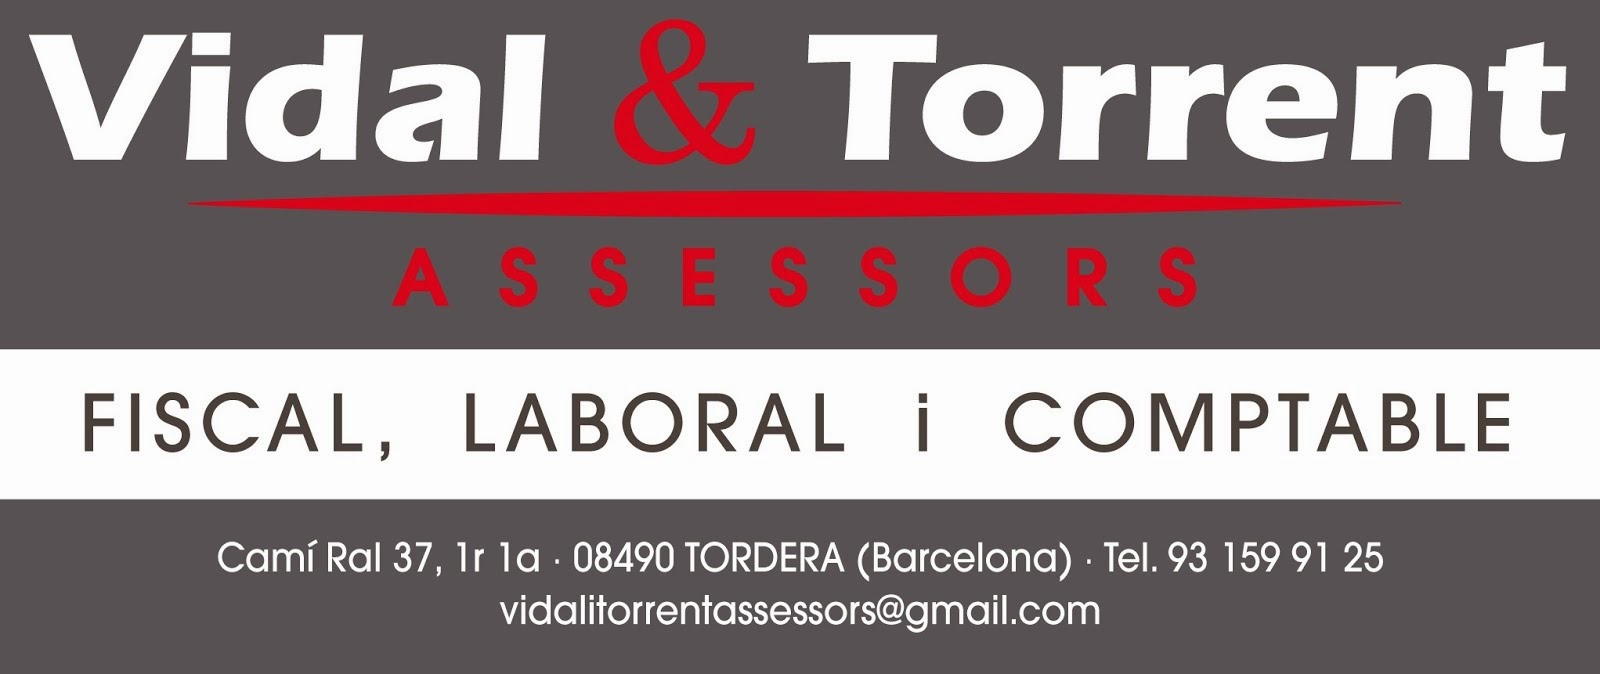 Vidal & Torrent